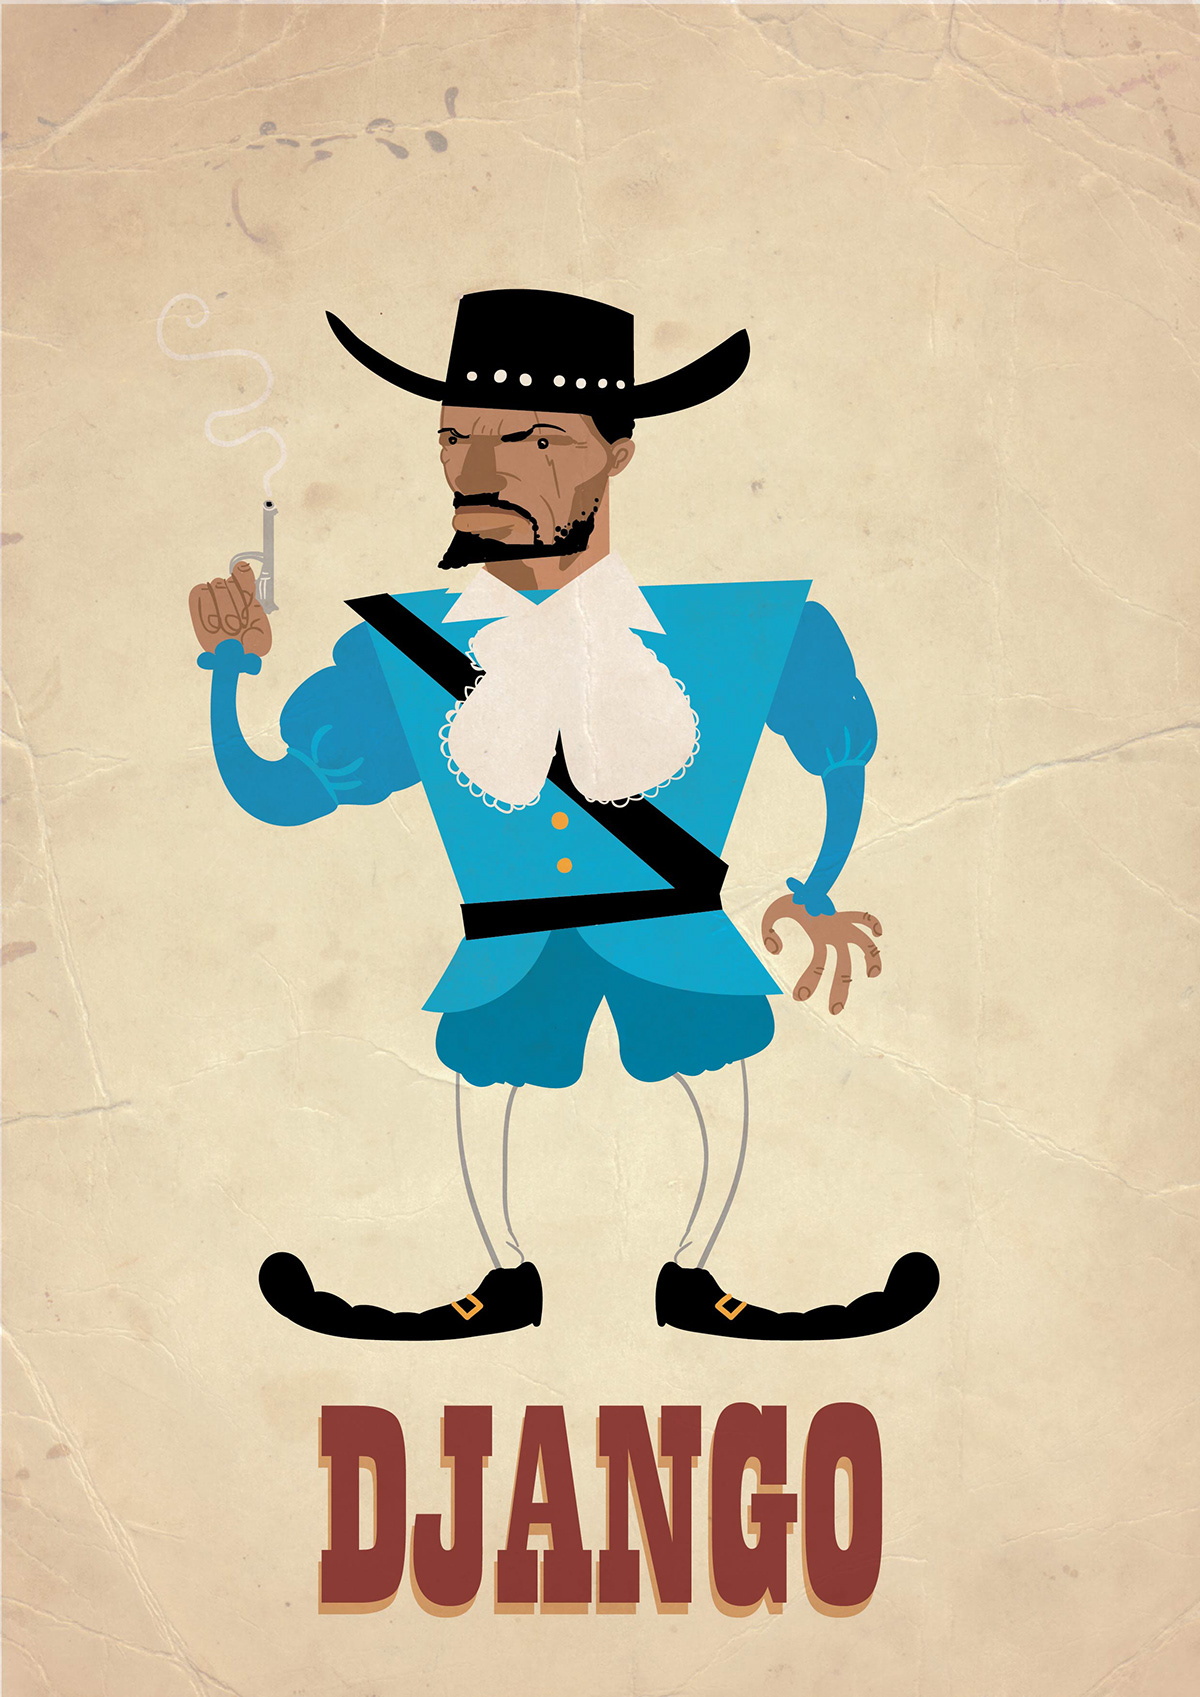 django unchained Tarantino western bounty Hunters